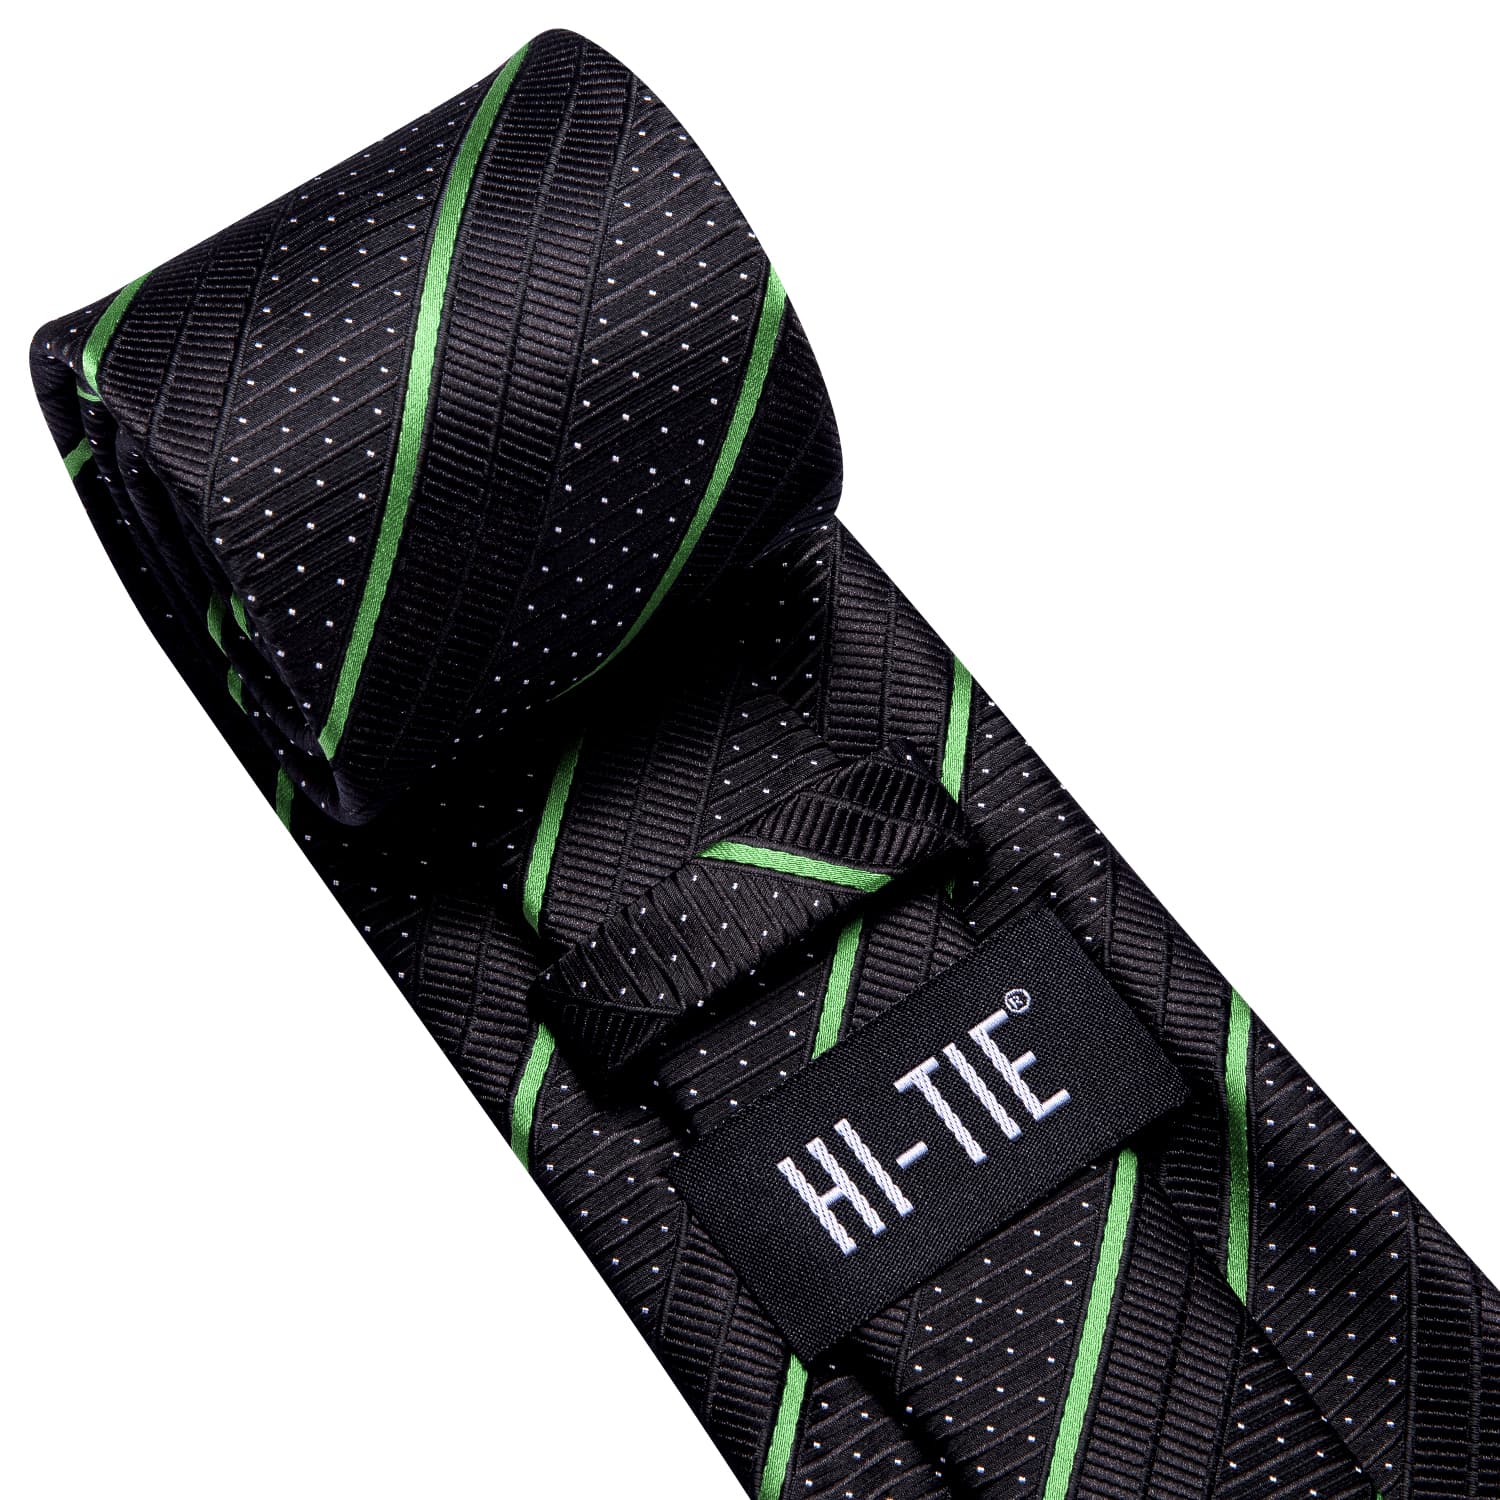  Black Tie Light Green Stripes White Dots Neck Tie Set for Men